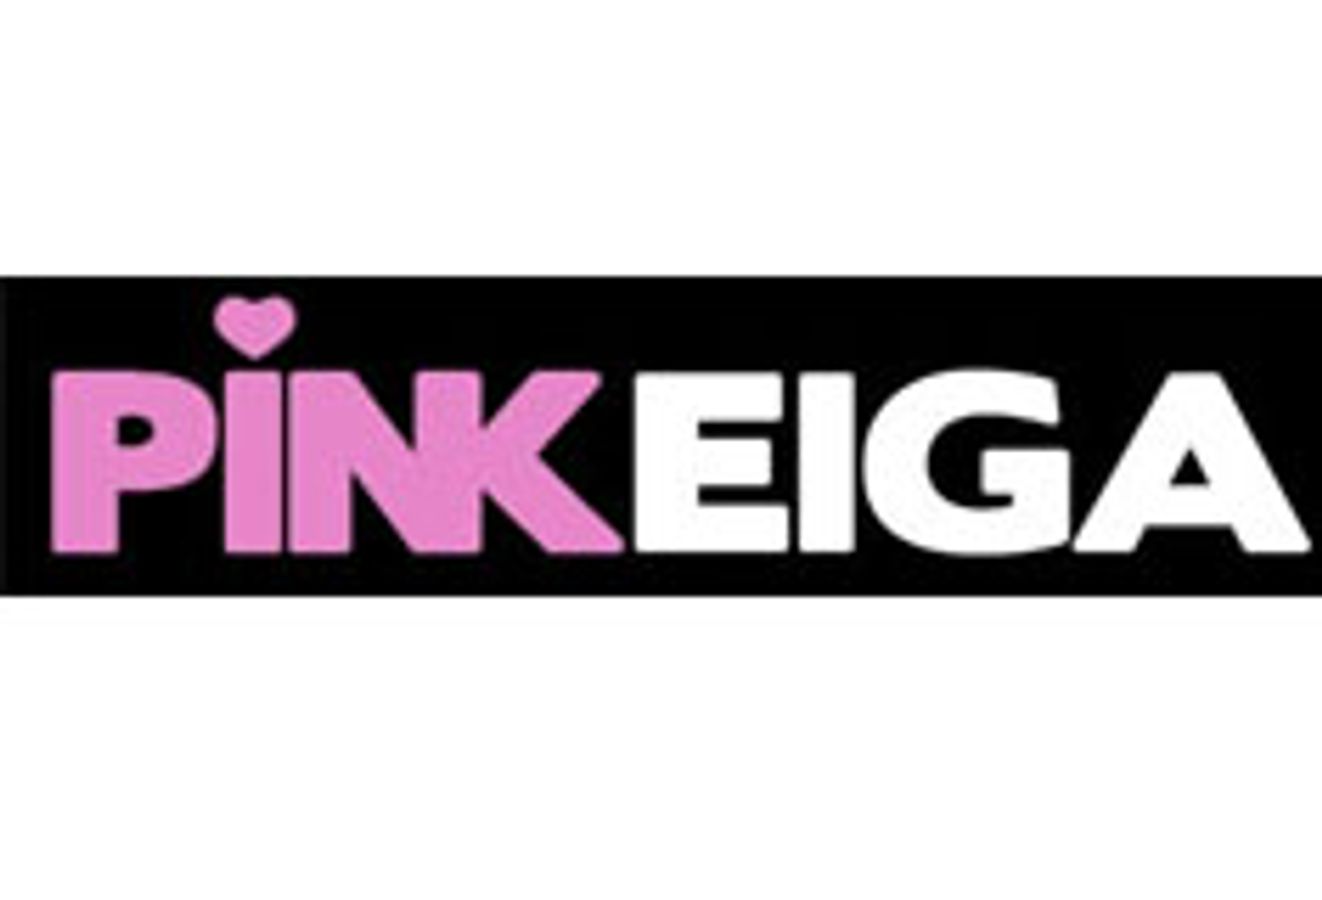 Pink Eiga